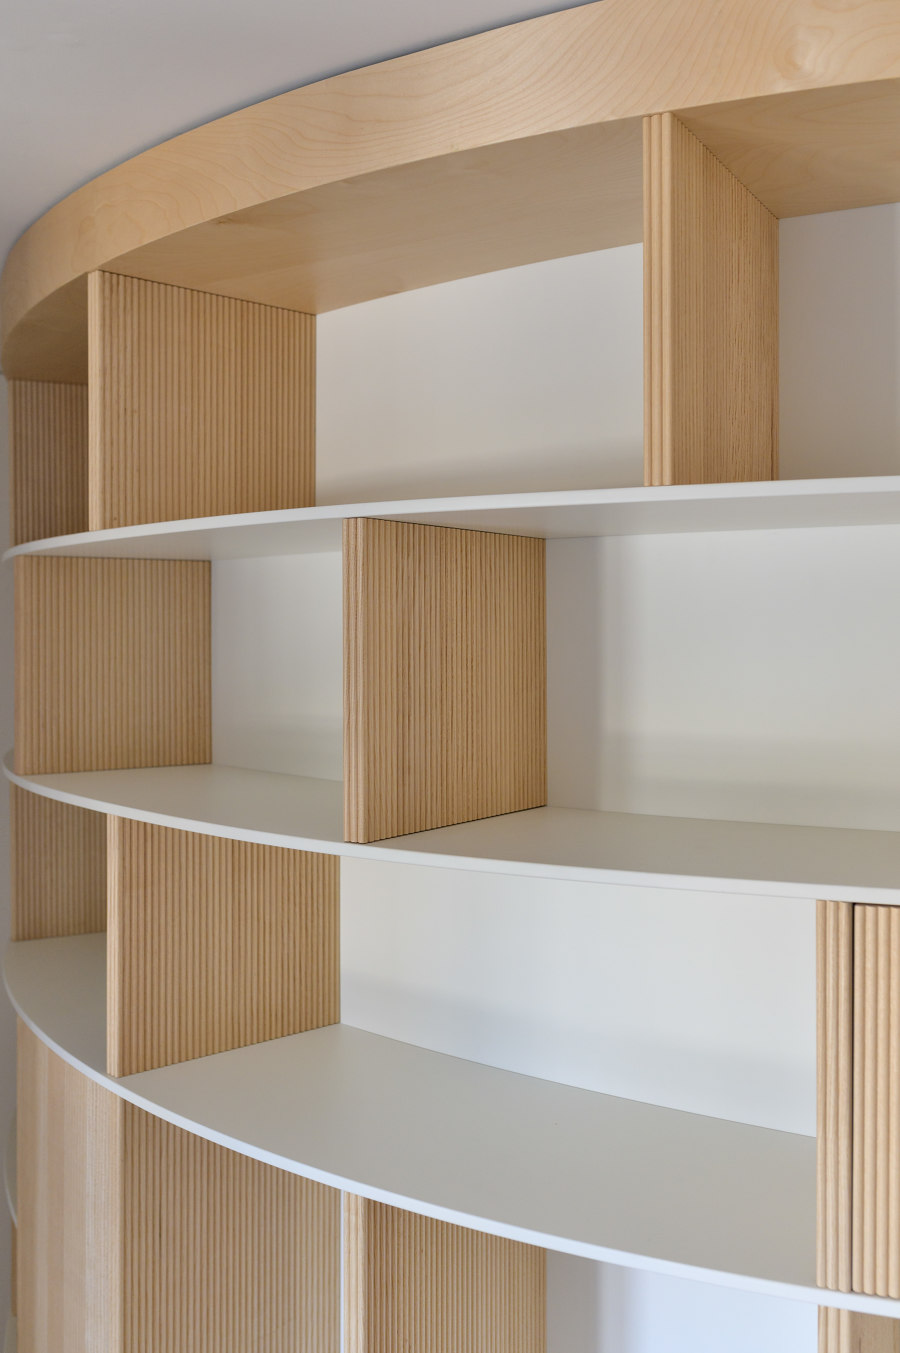 Apartment with a Library de Olbos Studio | Pièces d'habitation